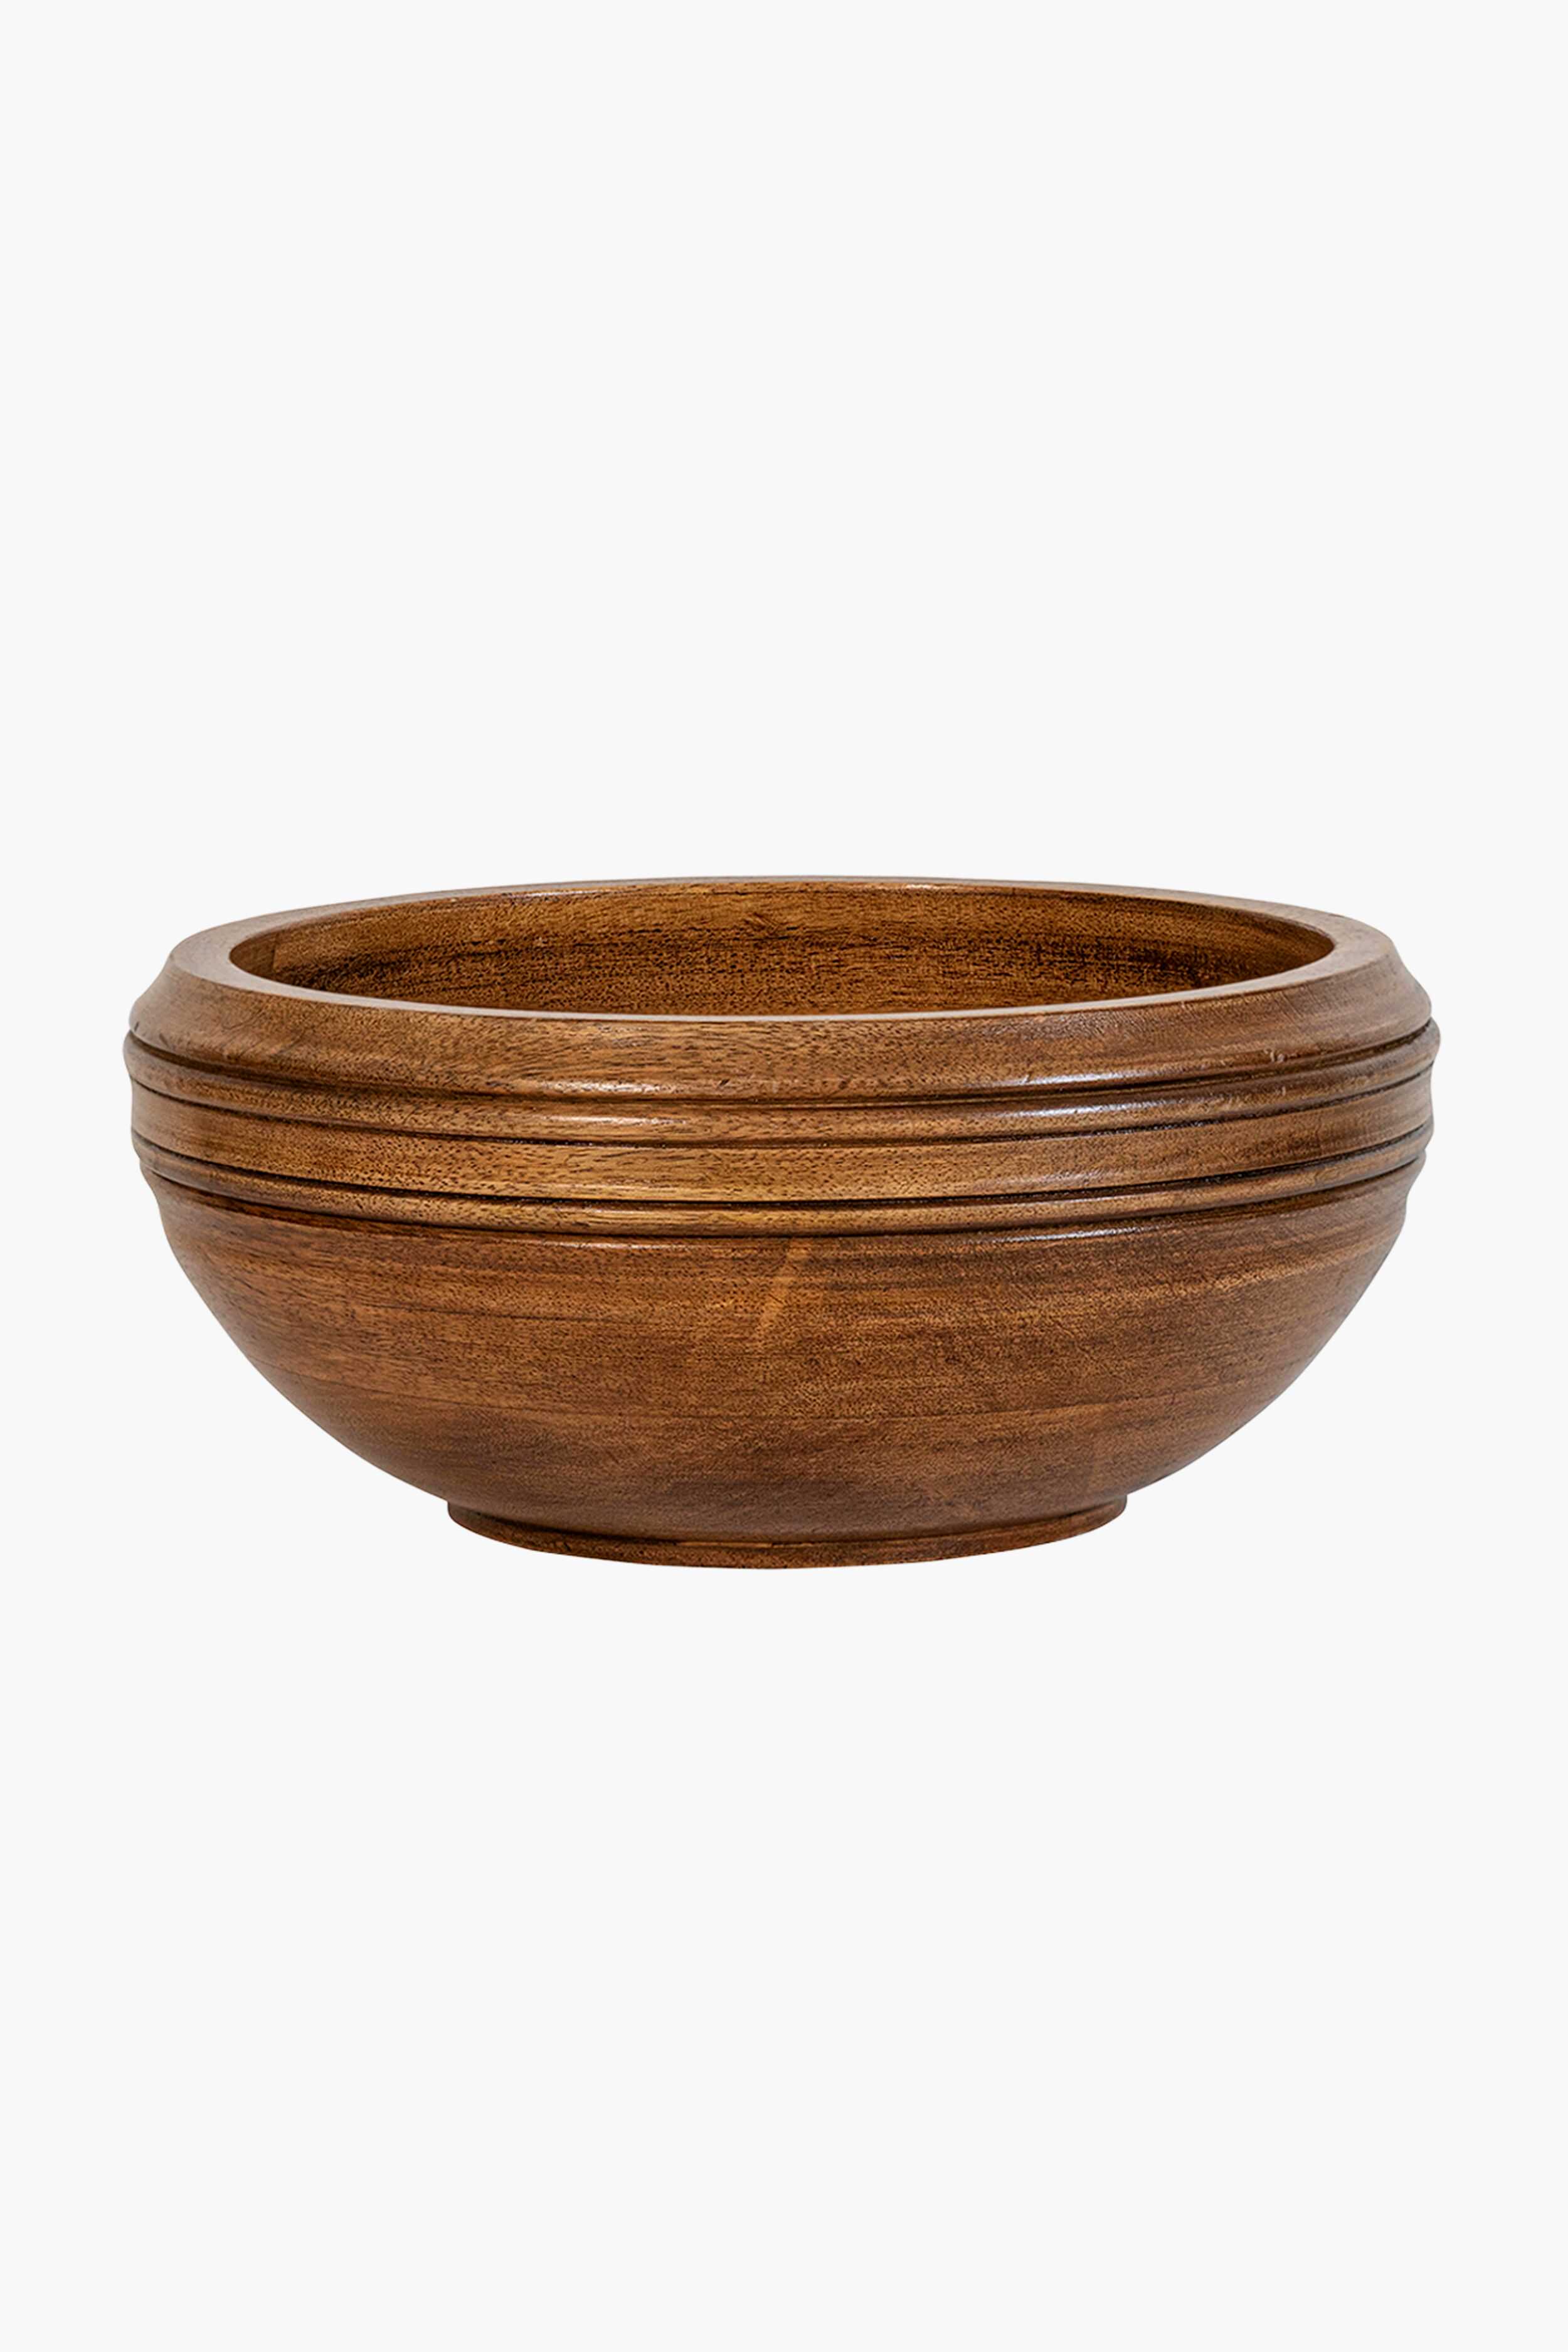 Serving Bowls - Ceramic, Wood & Glass Serving Bowls